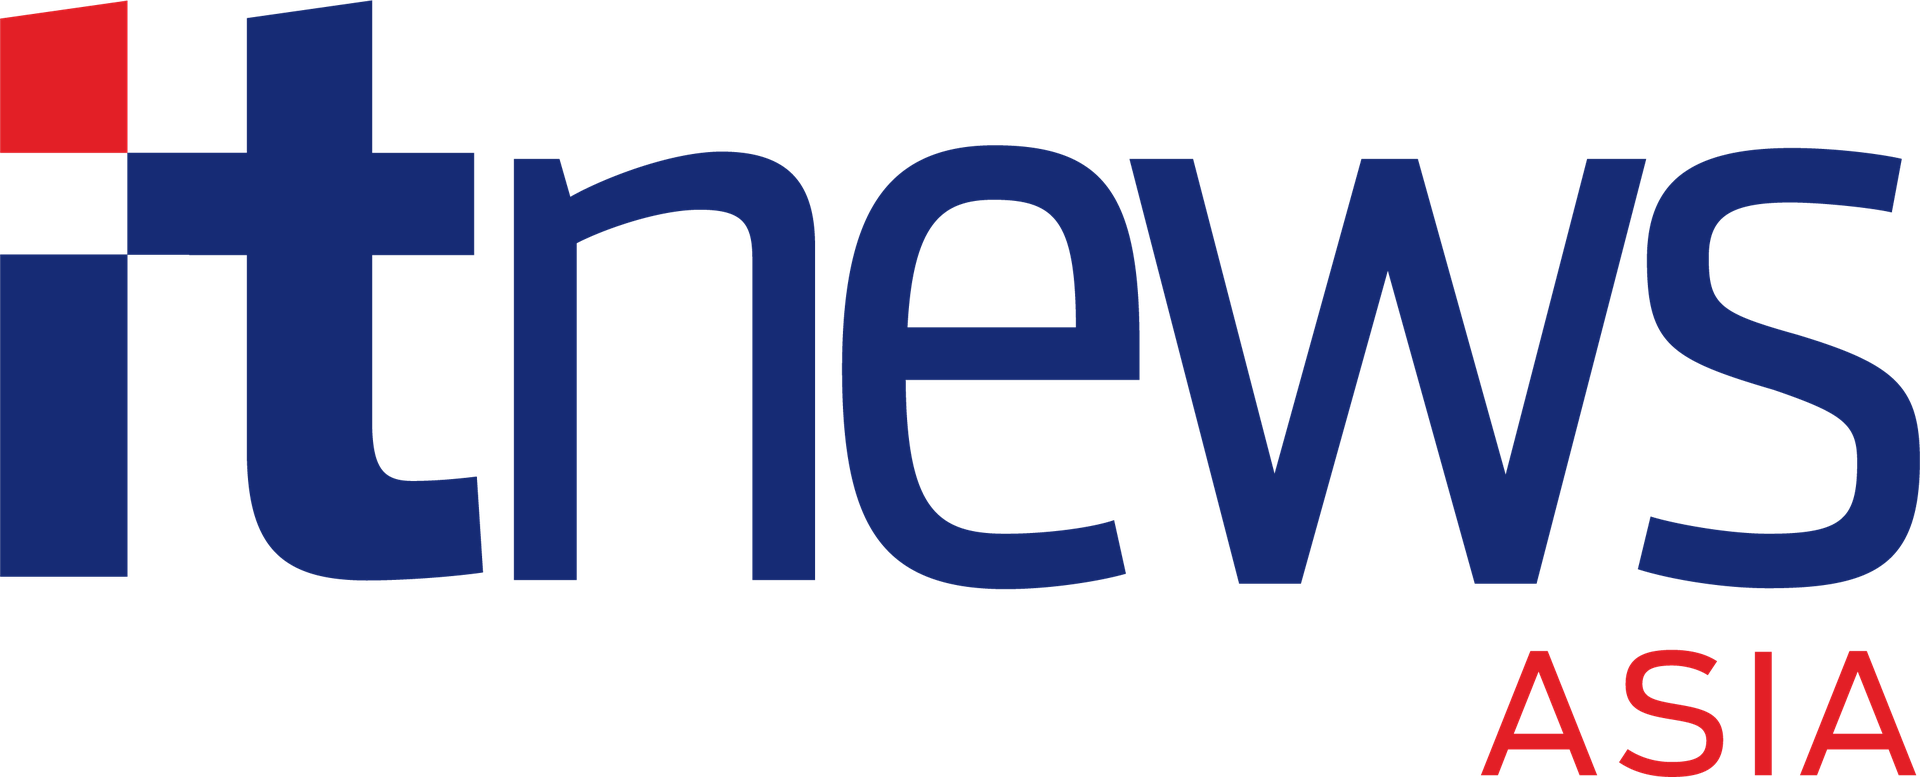 itnews Asia logo